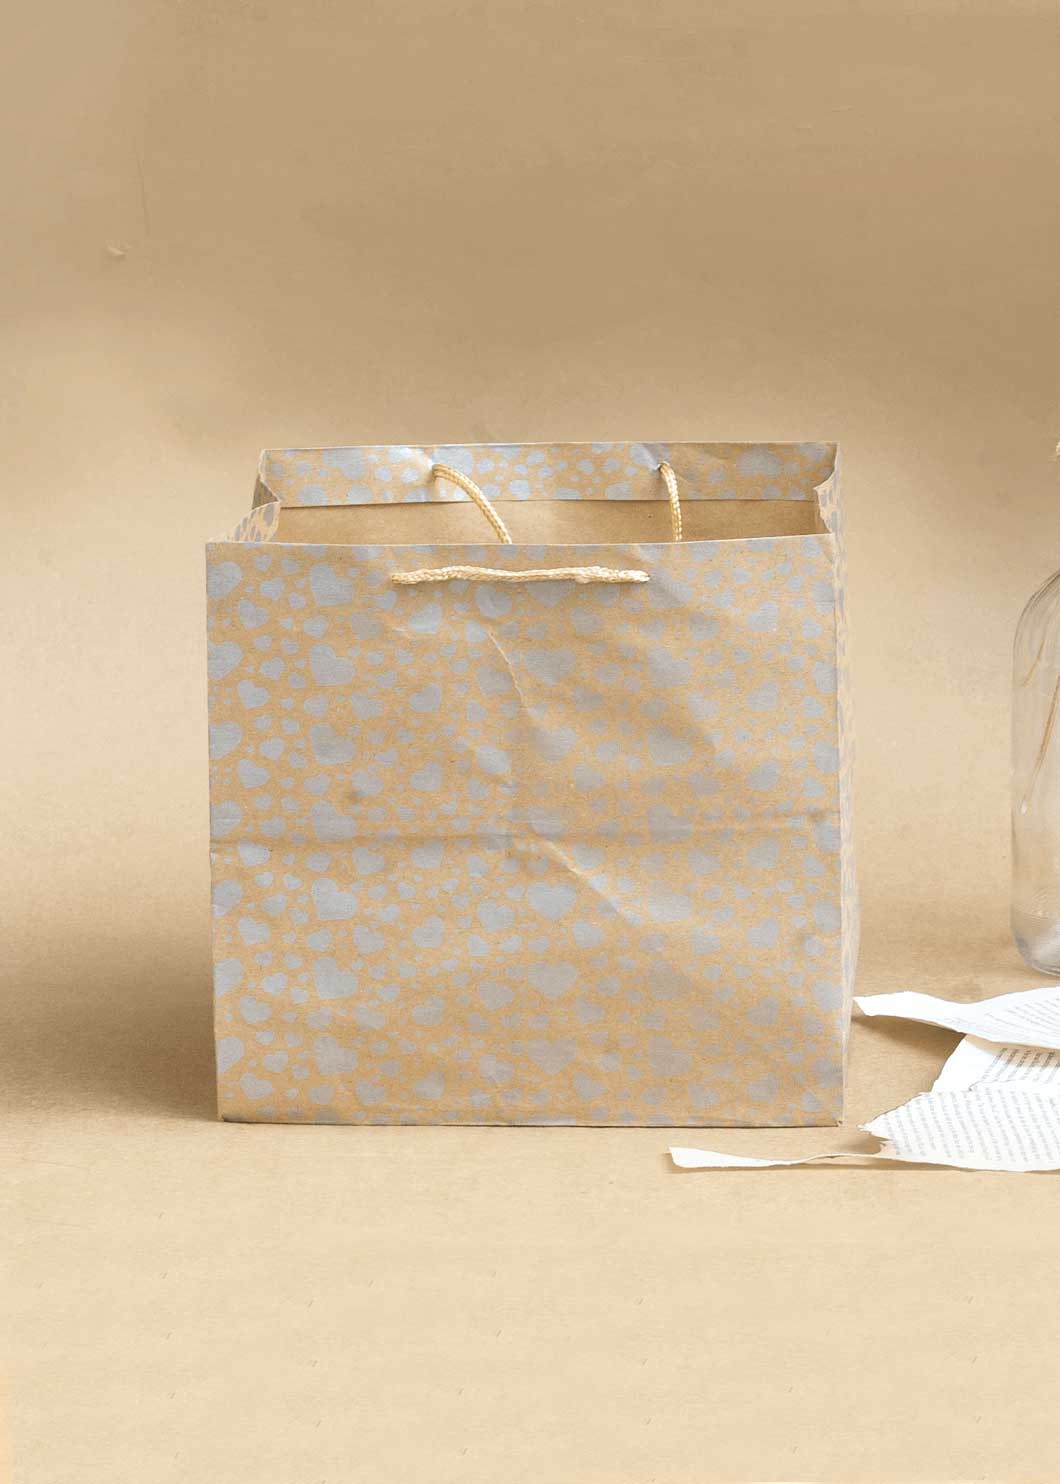 Craft Paper Bag Heart Pattern - Craft Bag - Golden Silver Red - 9x9 Paper Bag